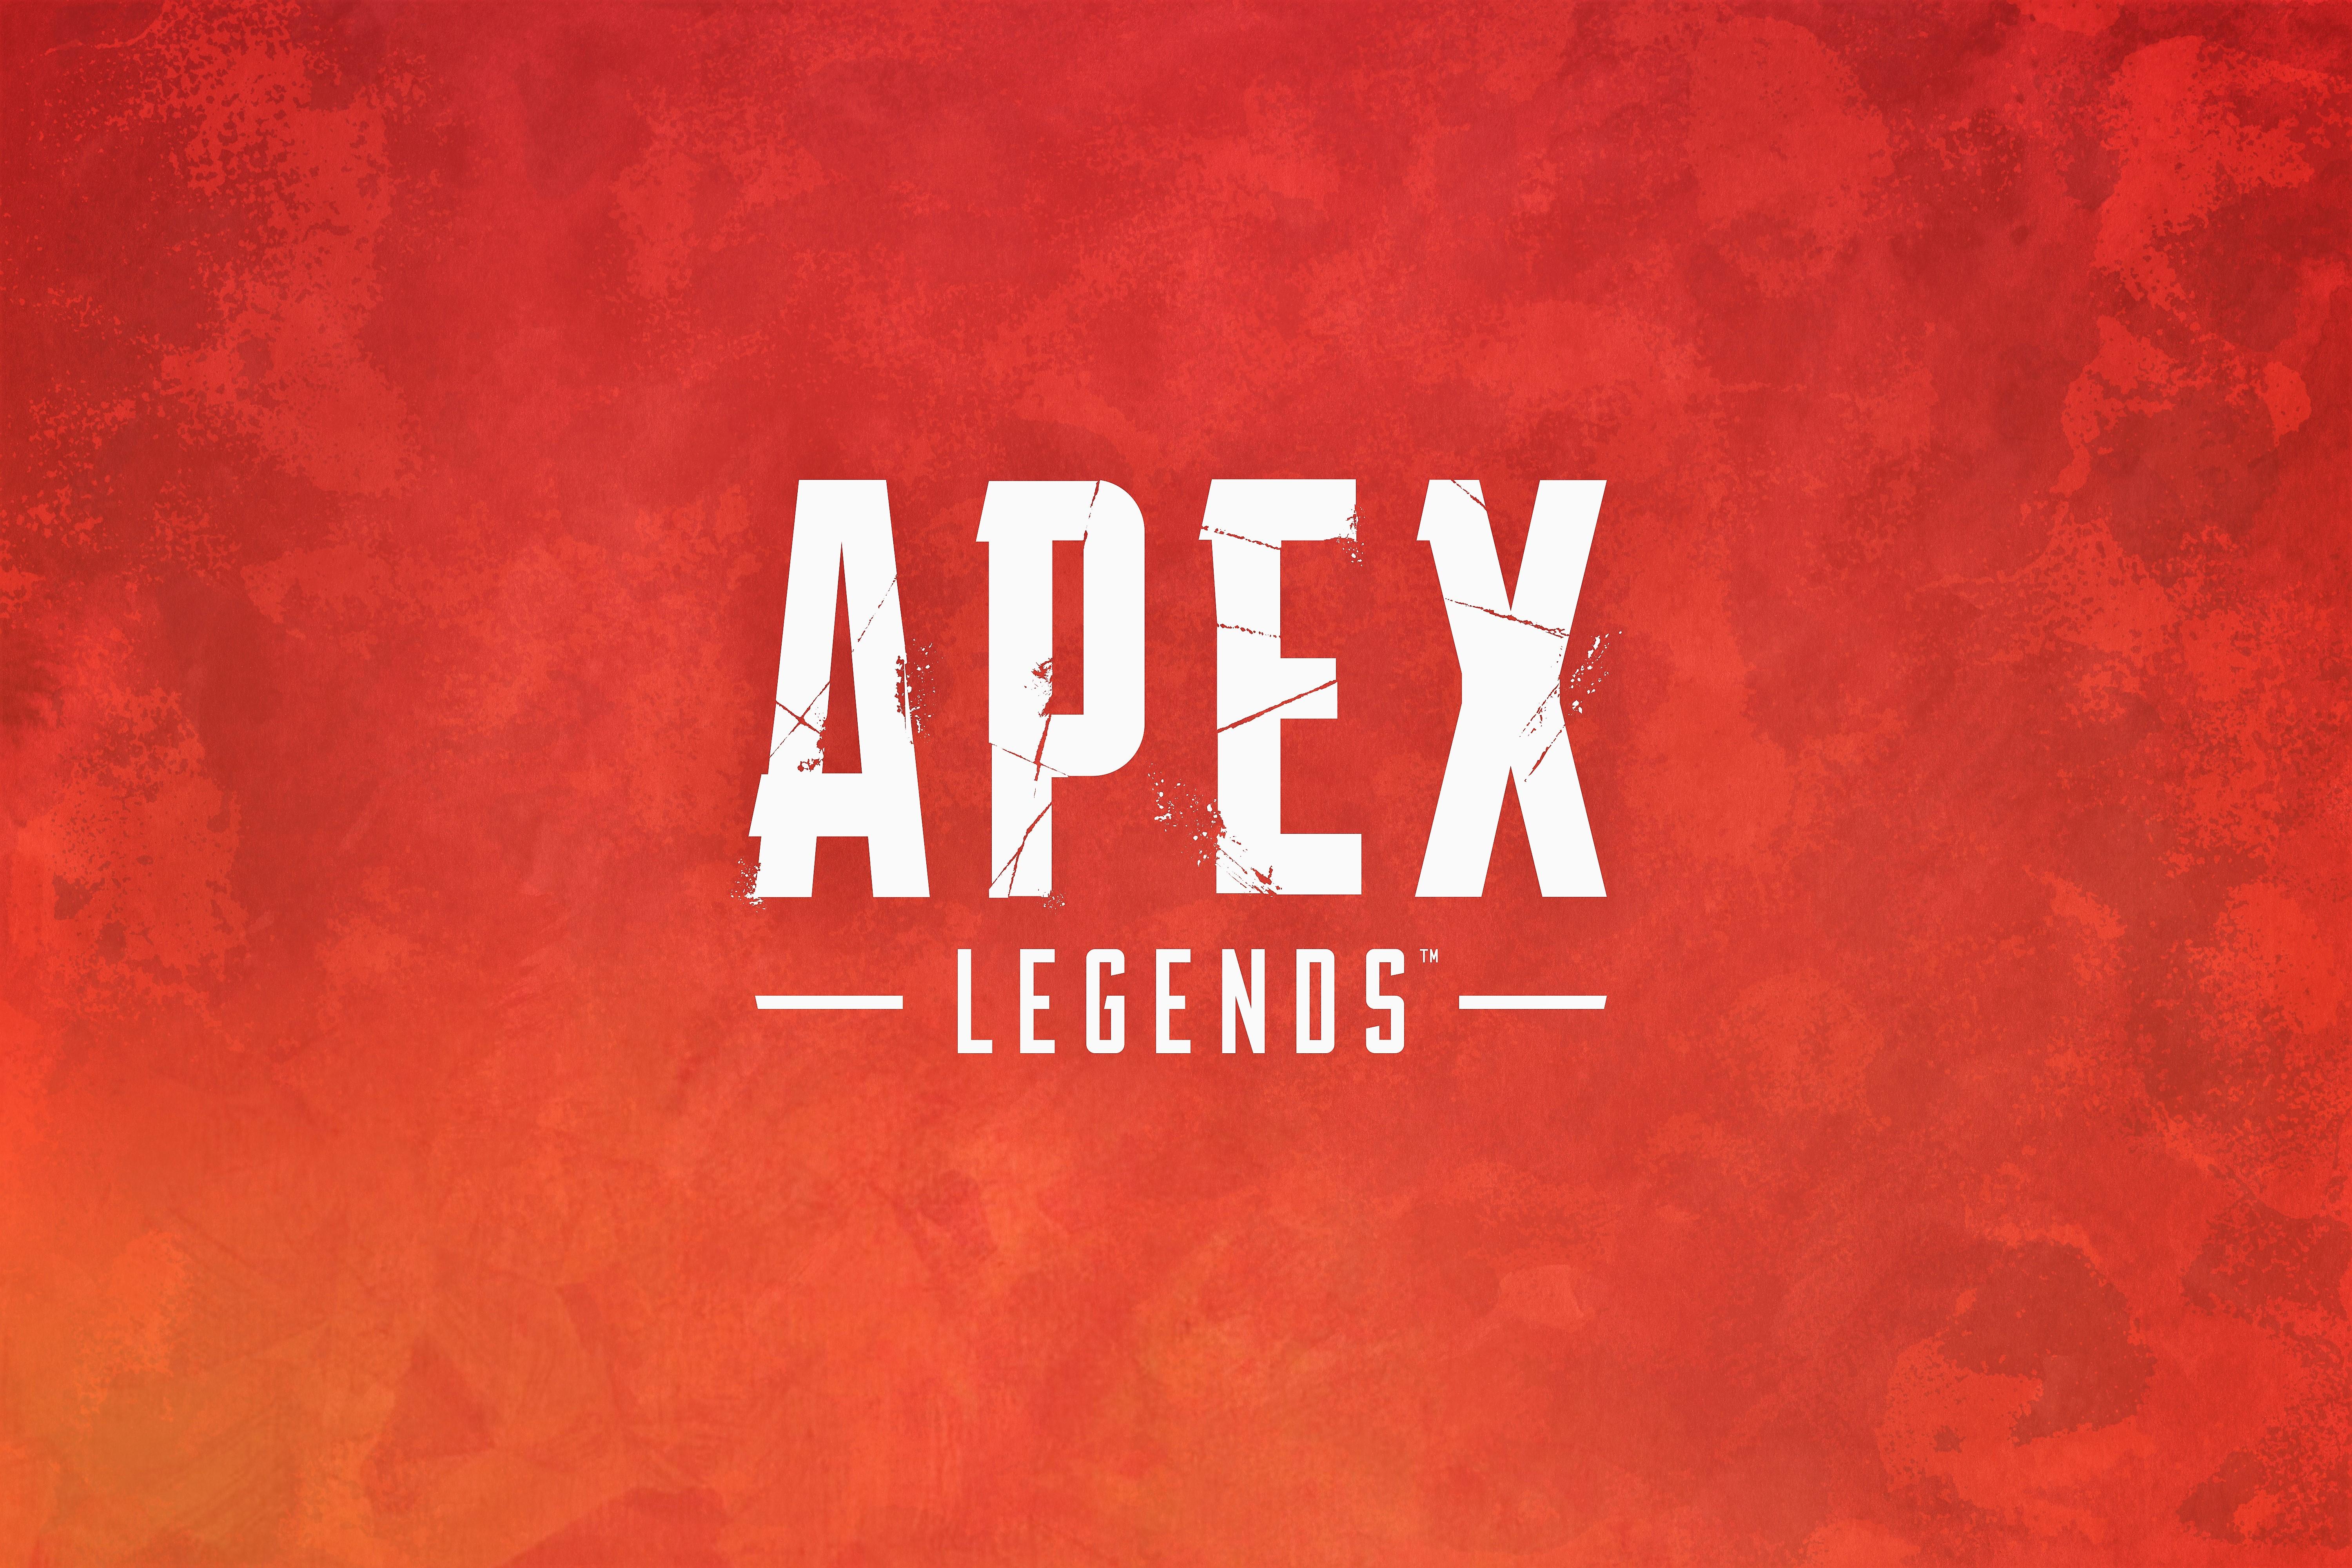 apex legends, video game